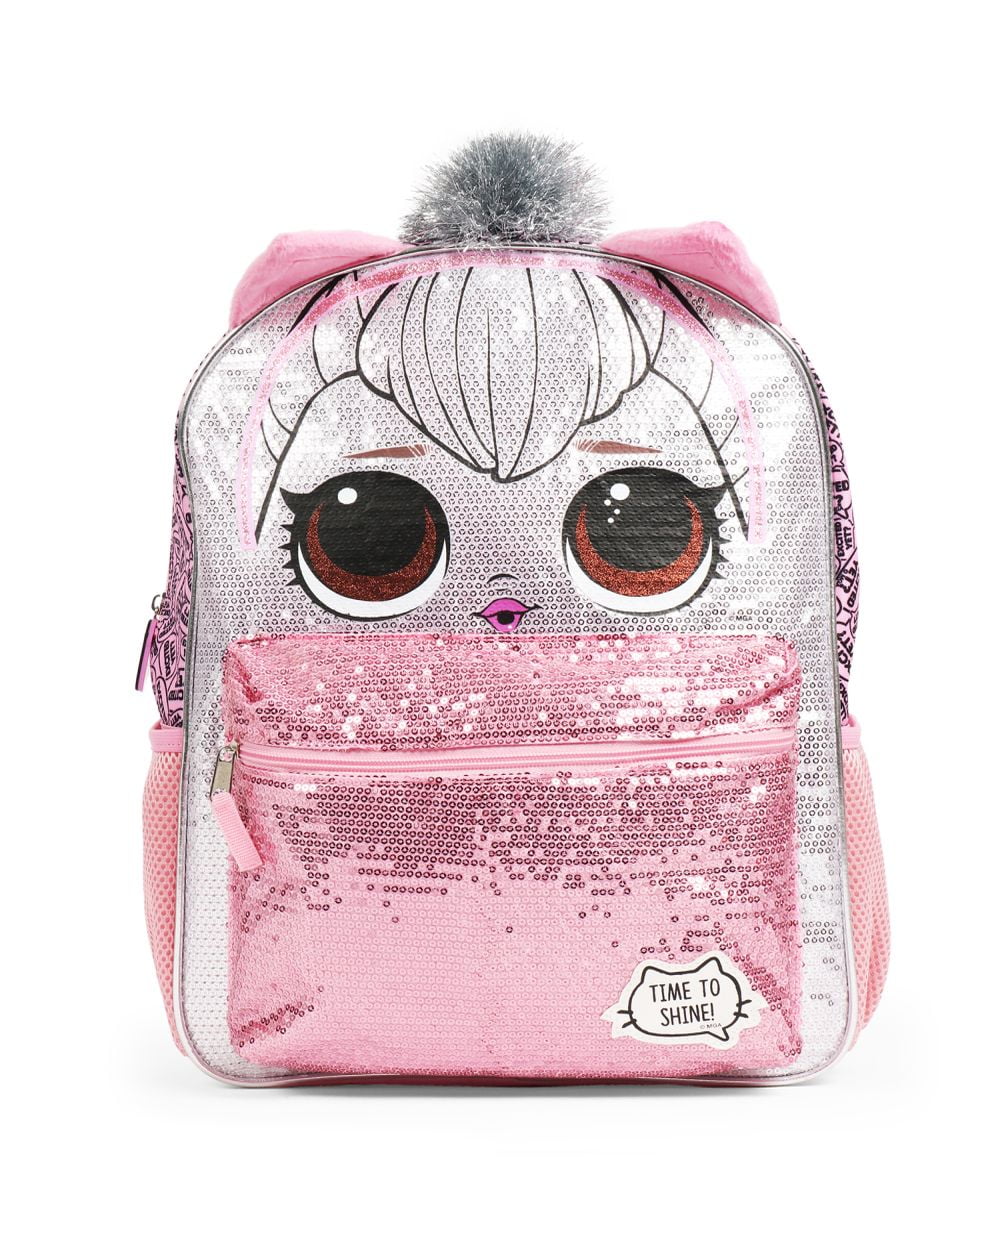 LOL Surprise Girls Backpack Queen Kitty Pink Glitter Backpack 16 inch 6480f442 673d 4e45 b60b 187ec3982b20.e314cbbefc7ad149c1ec92459ebde944